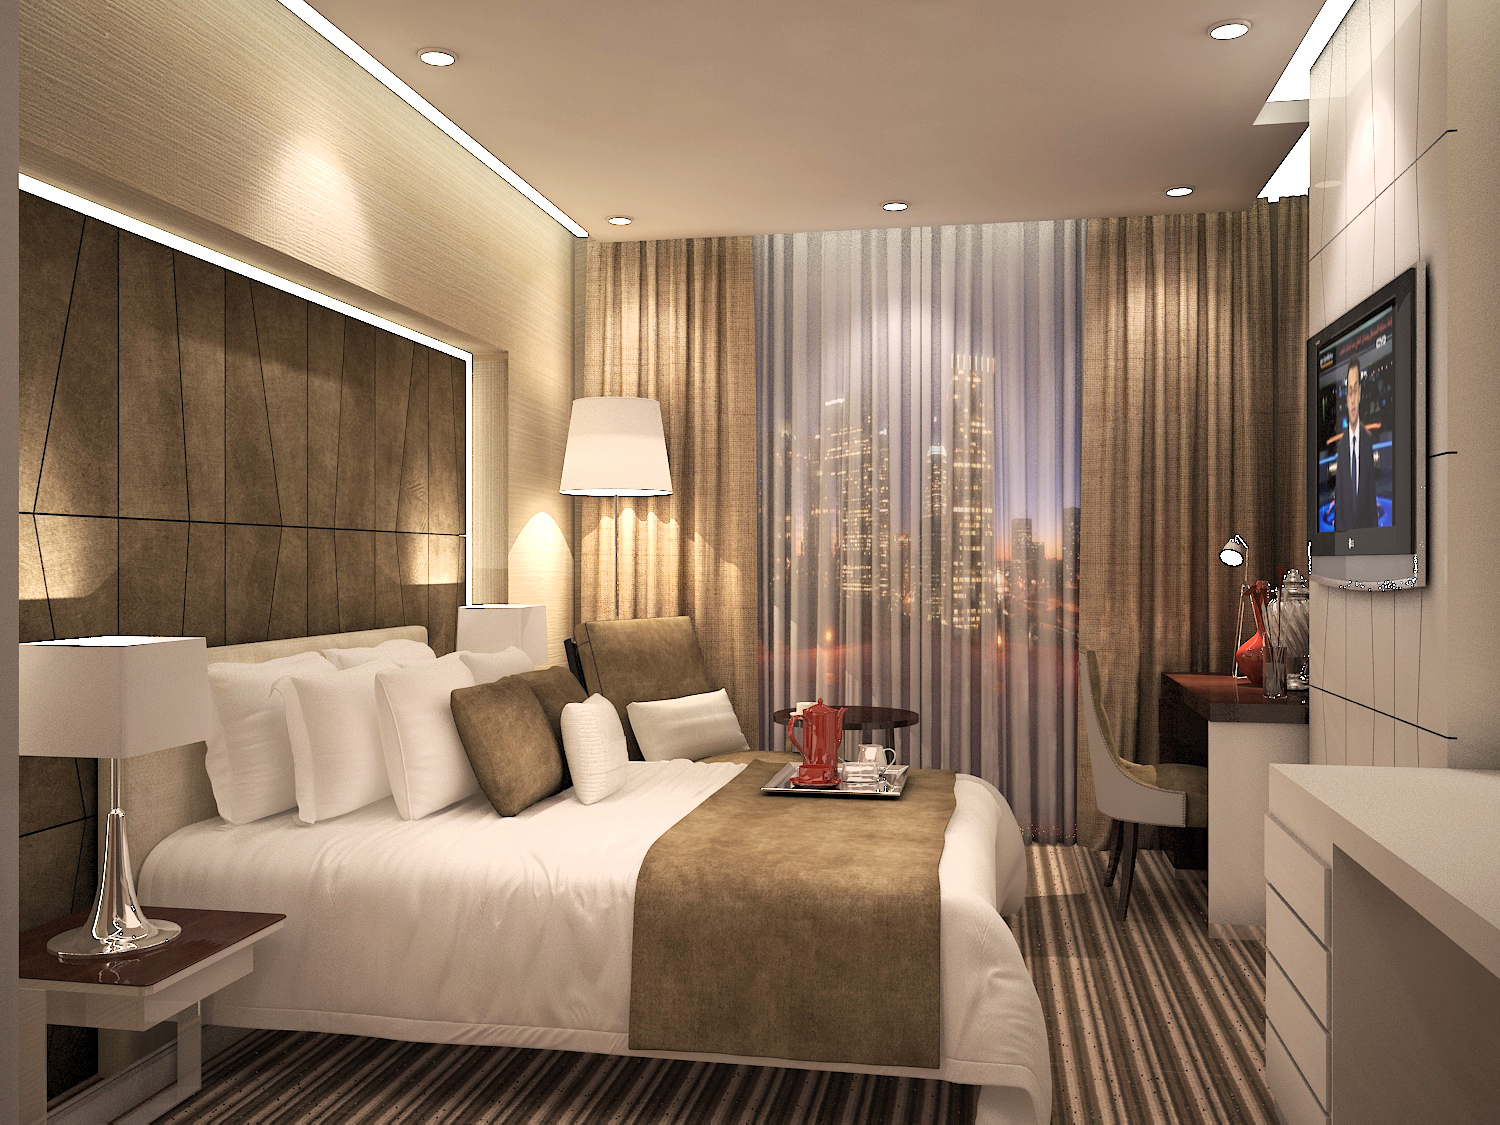 INTERIOR DESIGN UGANDA 3 star Hotel room interior design 